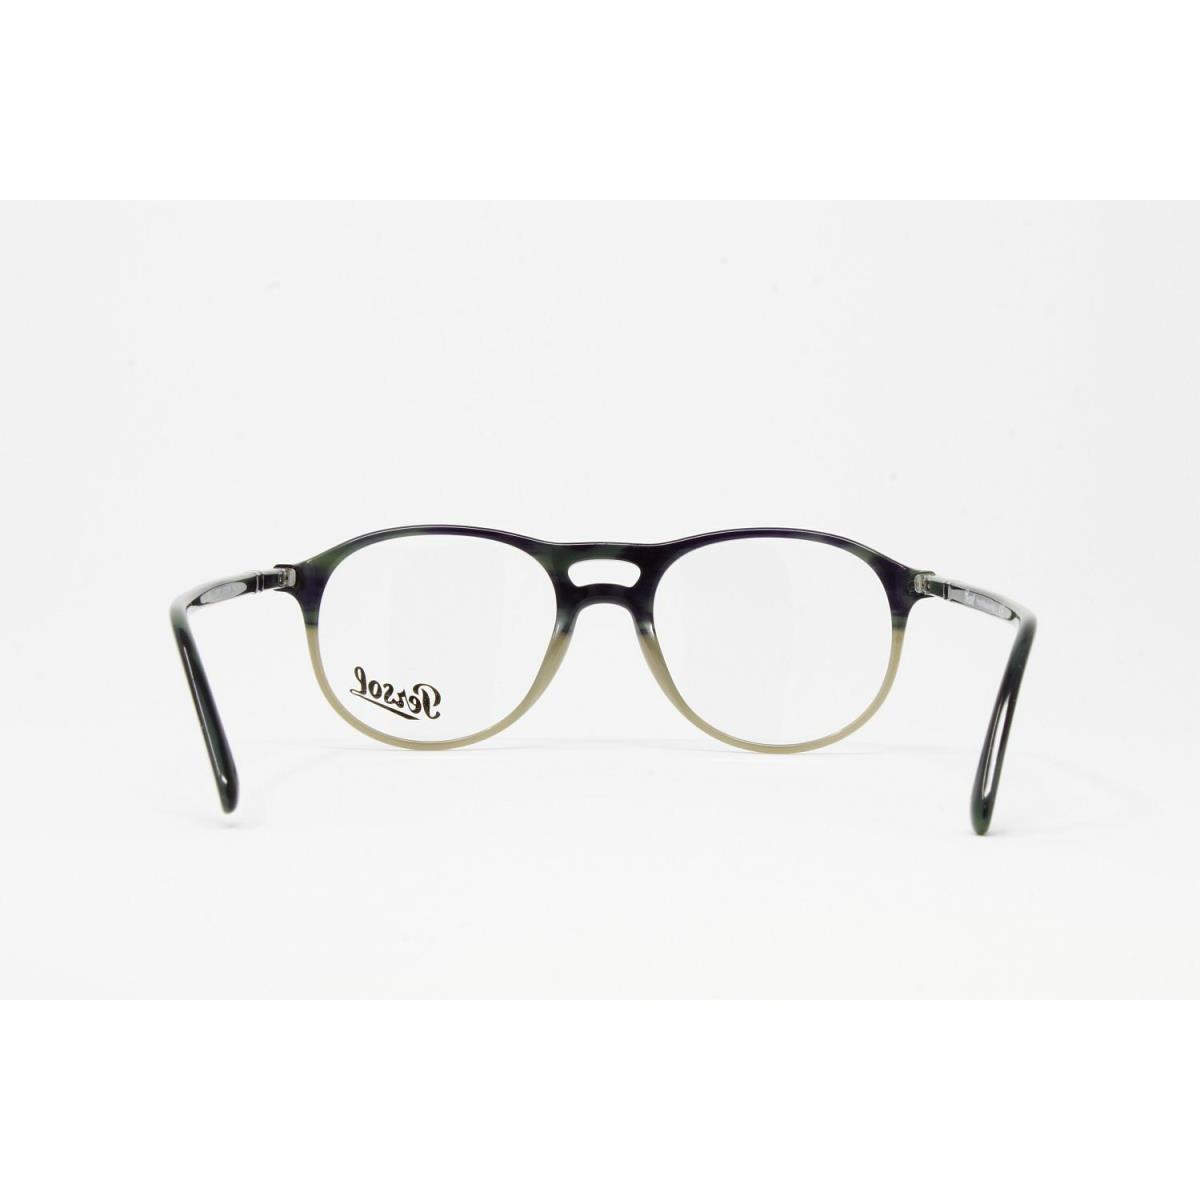 Persol eyeglasses  - Green Frame 1